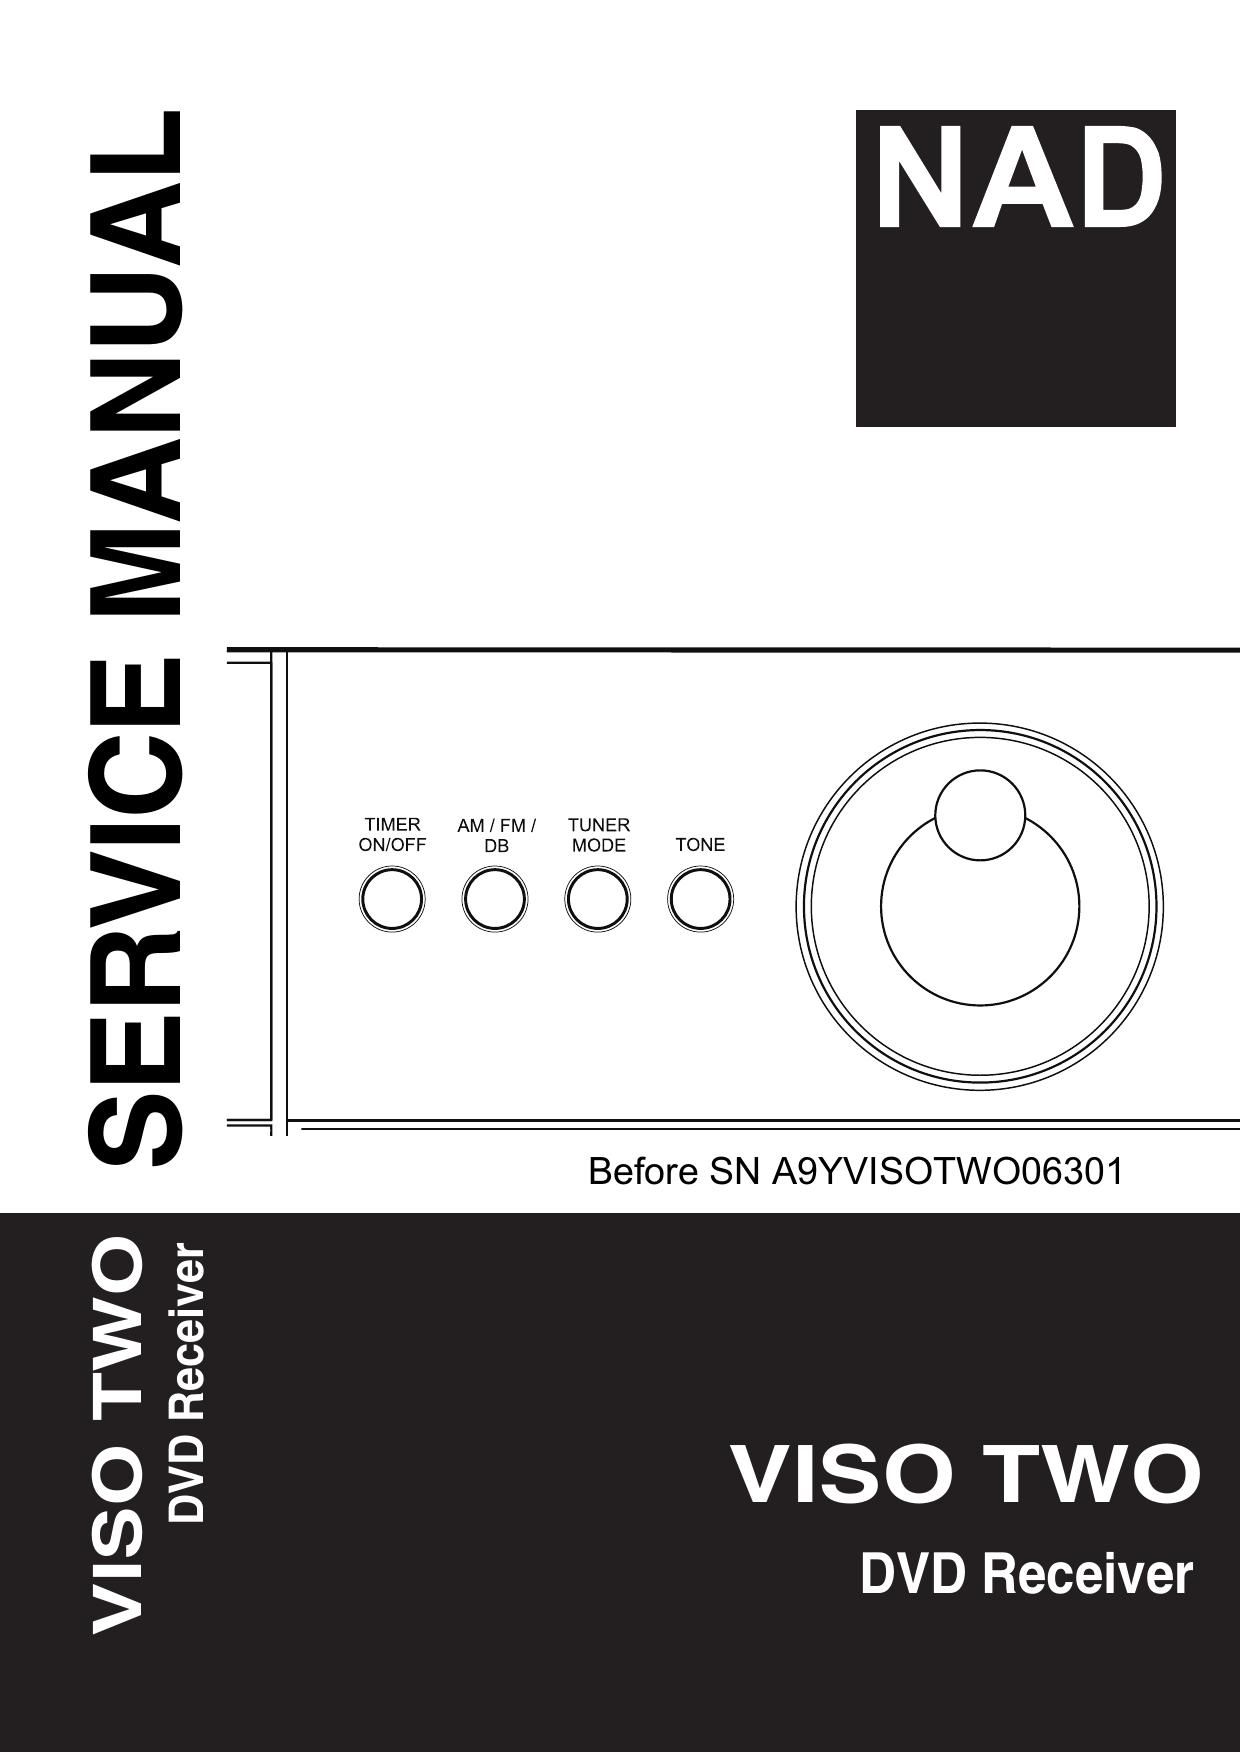 Nad Viso Two Service Manual